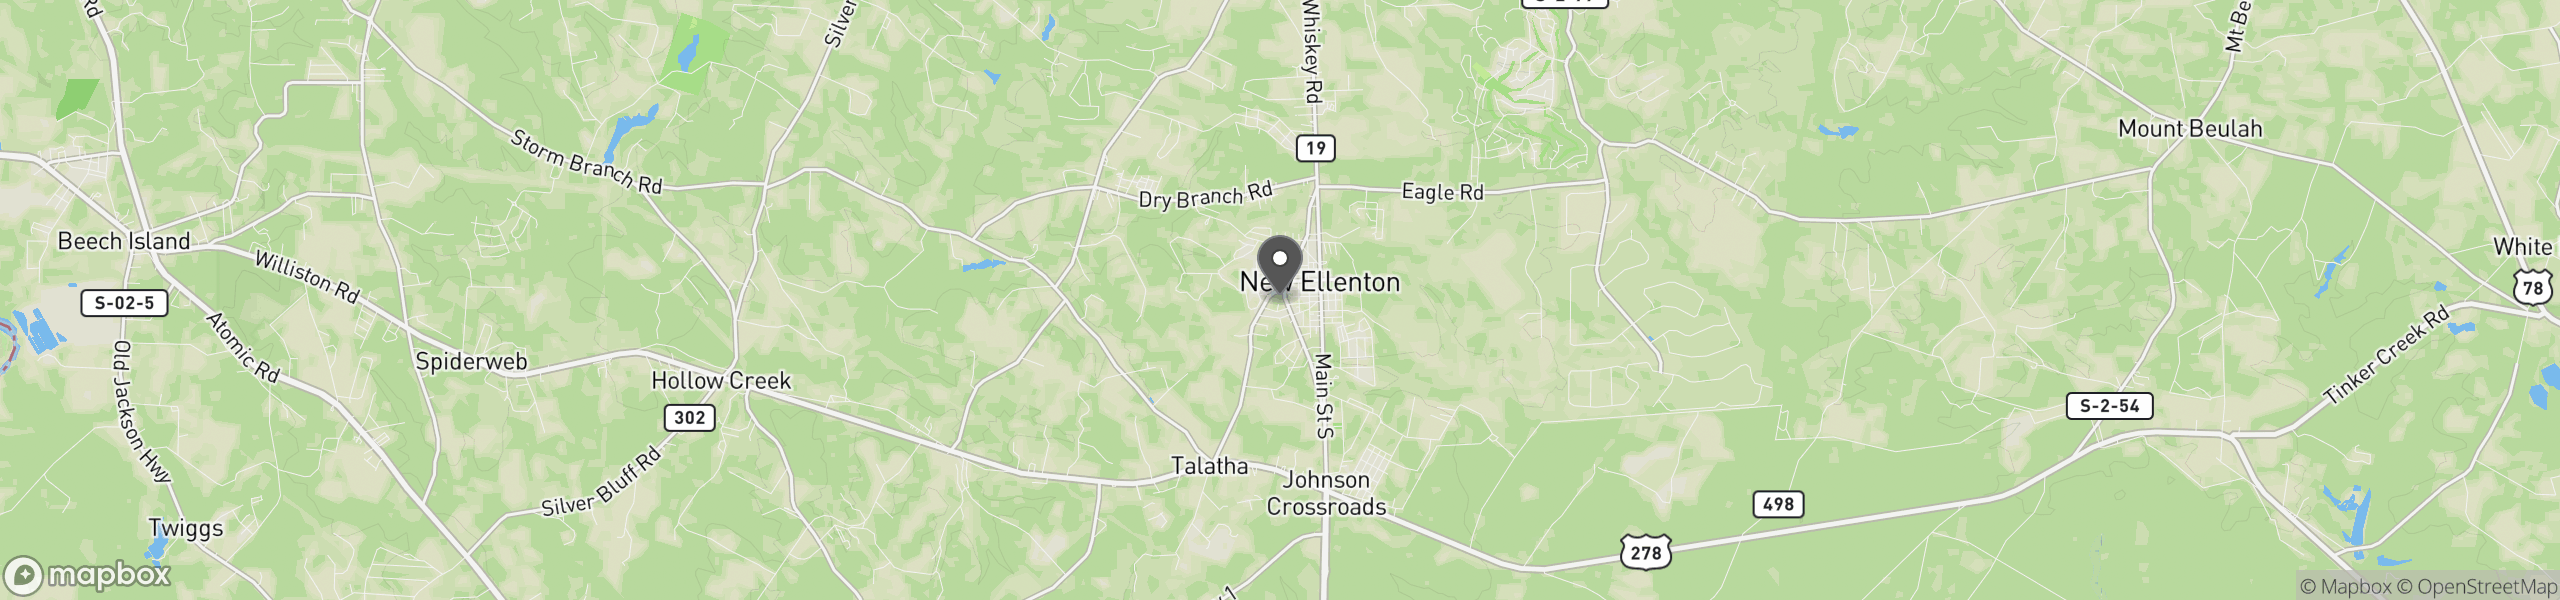 New Ellenton, SC